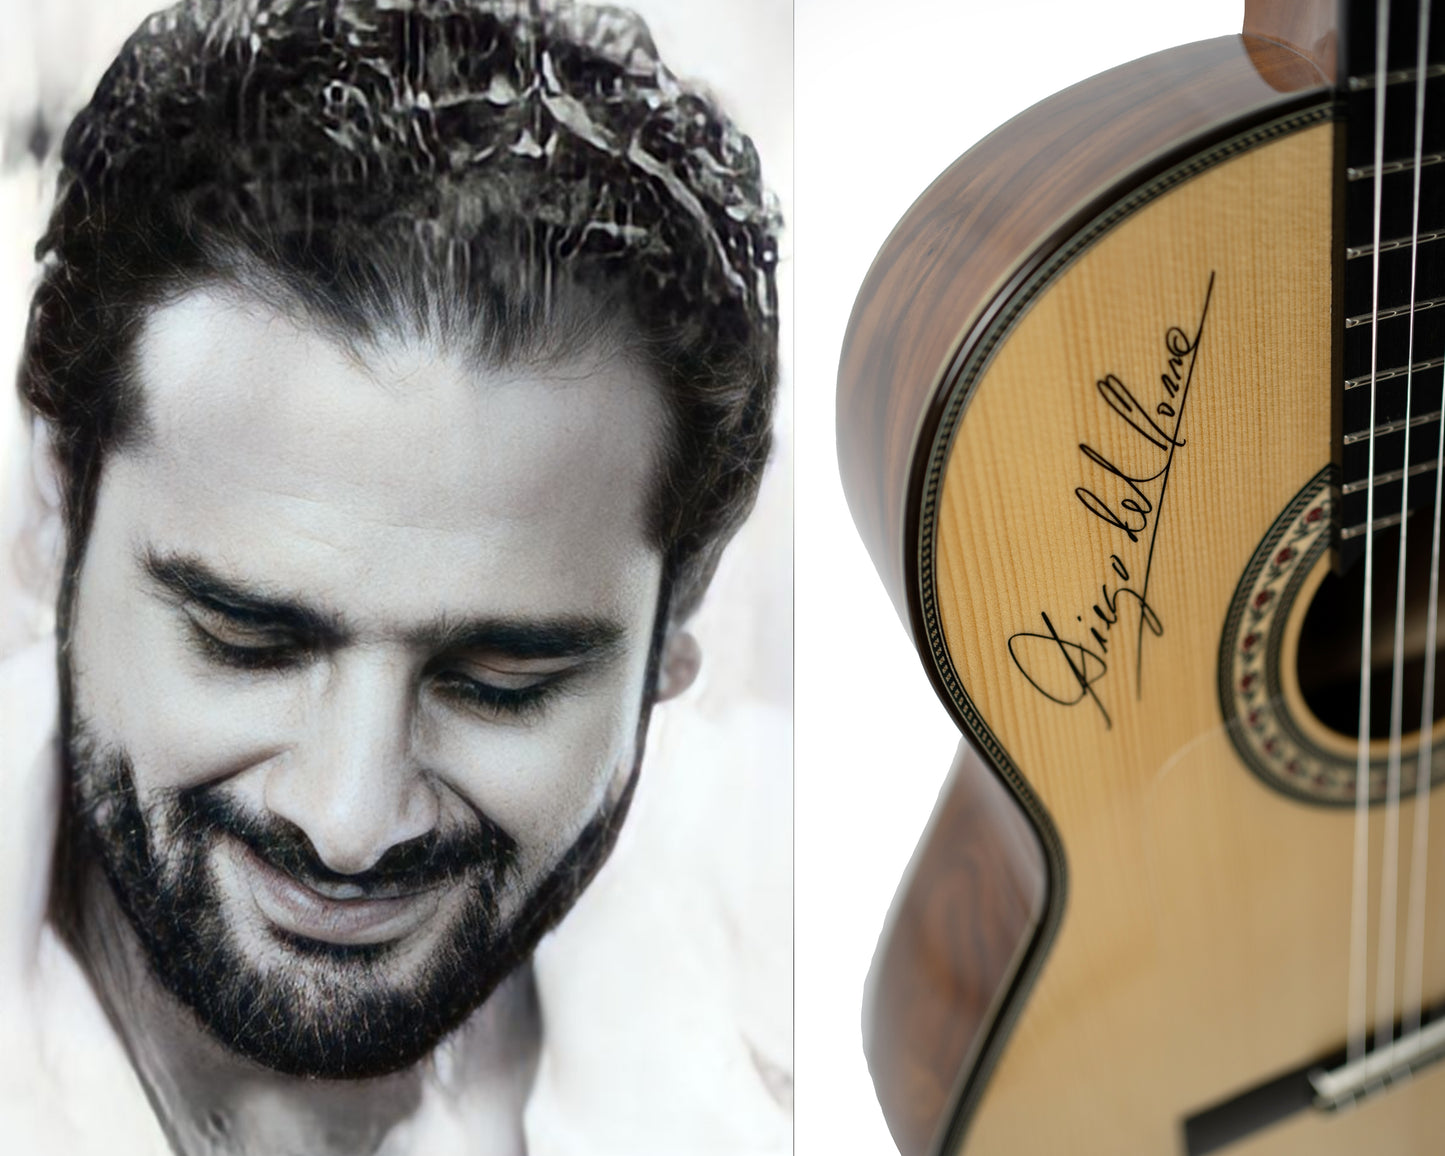 Guitarra Flamenca Modesto Malla "Diego del Morao" Fishman Presys Blend firmada en la tapa